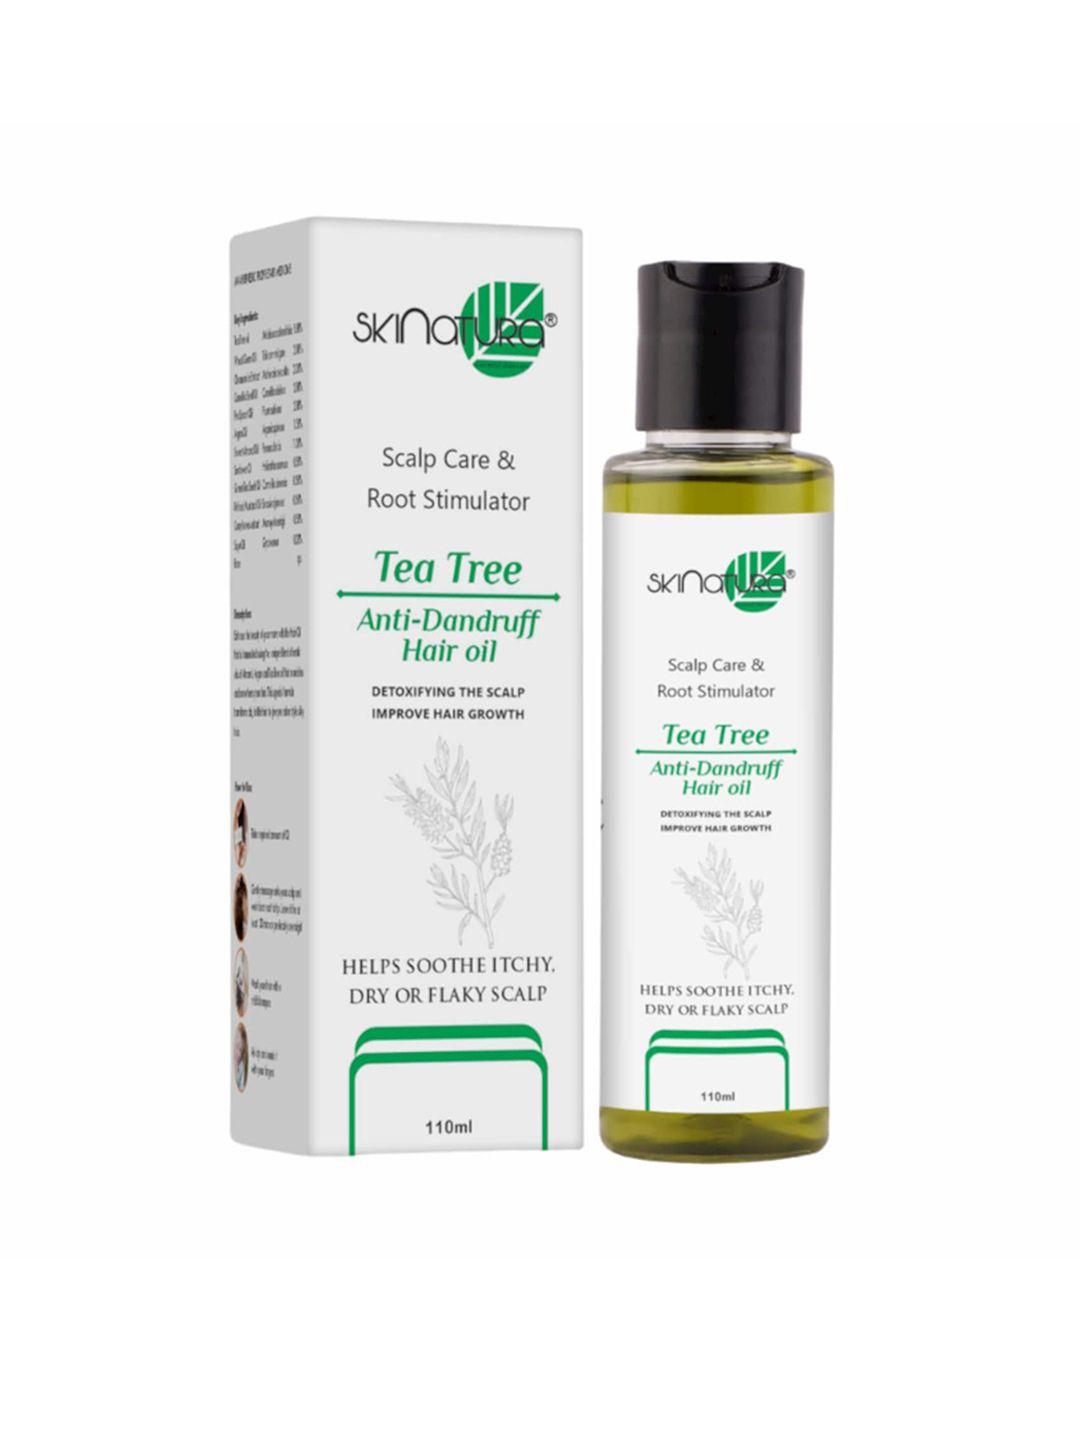 skinatura tea tree anti-dandruff hair oil - scalp care & root stimulator - 110ml